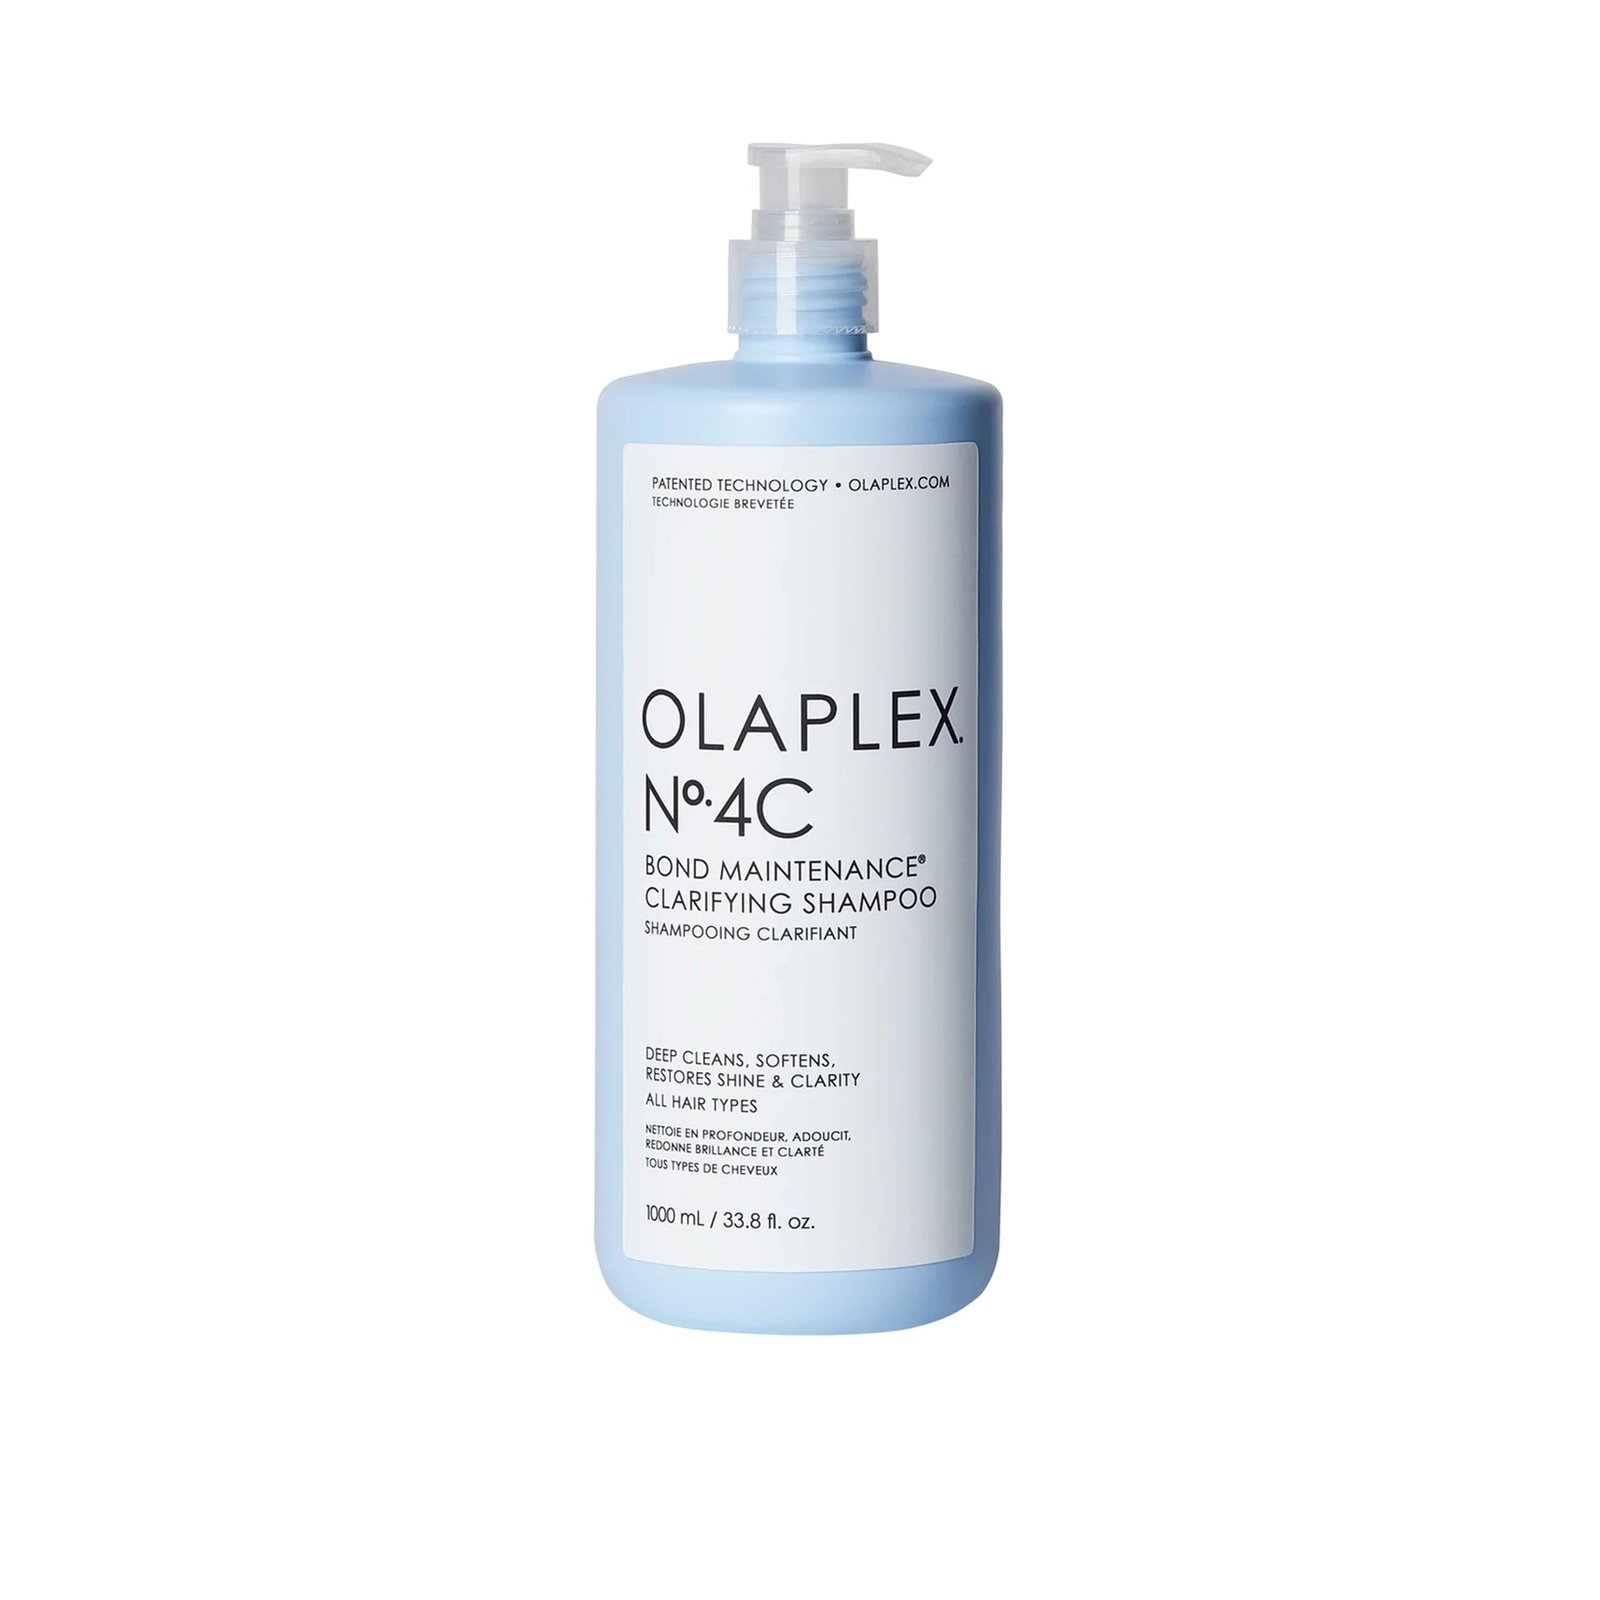 OLAPLEX Bond Maintenance Clarifying Shampoo Nº4C 1L (33.8 fl oz)